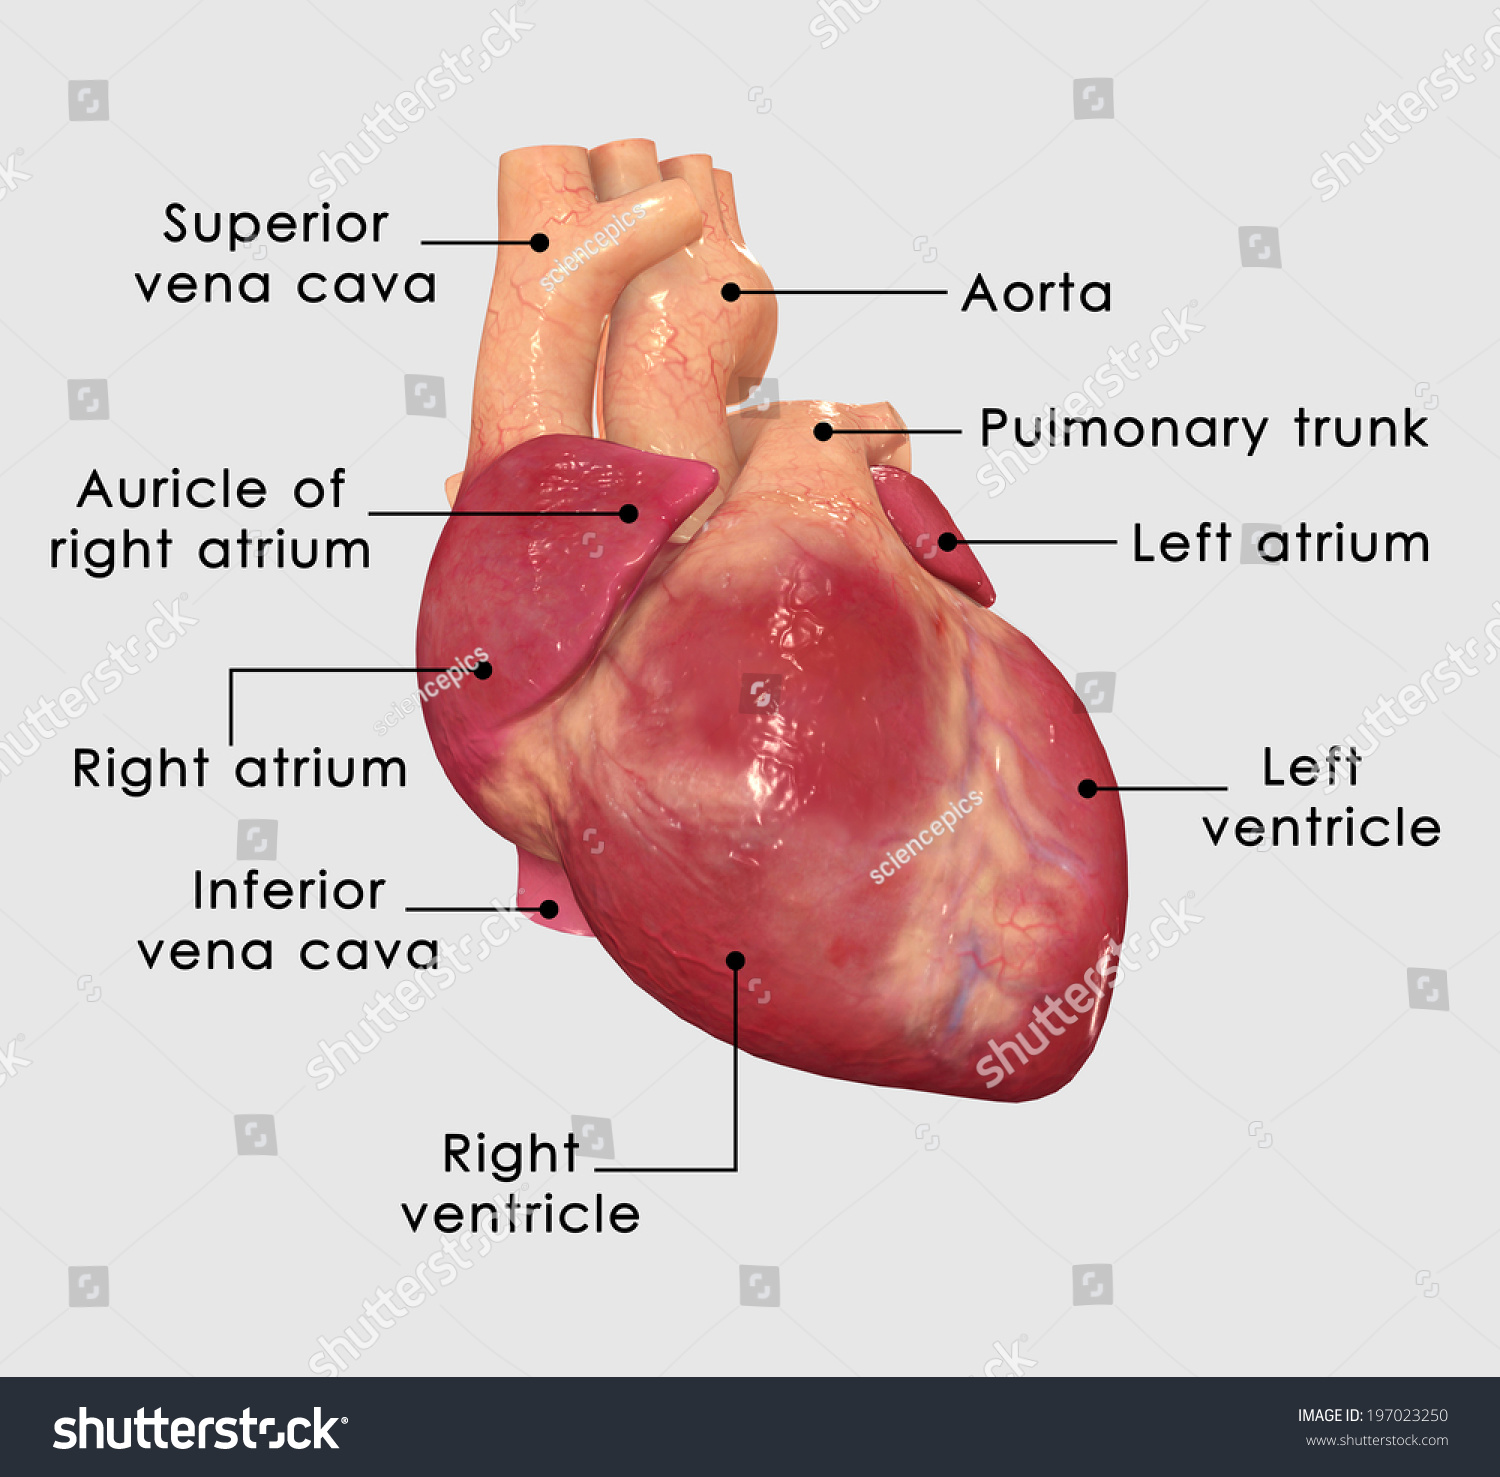 Human Heart Labelled Stock Photo 197023250 : Shutterstock